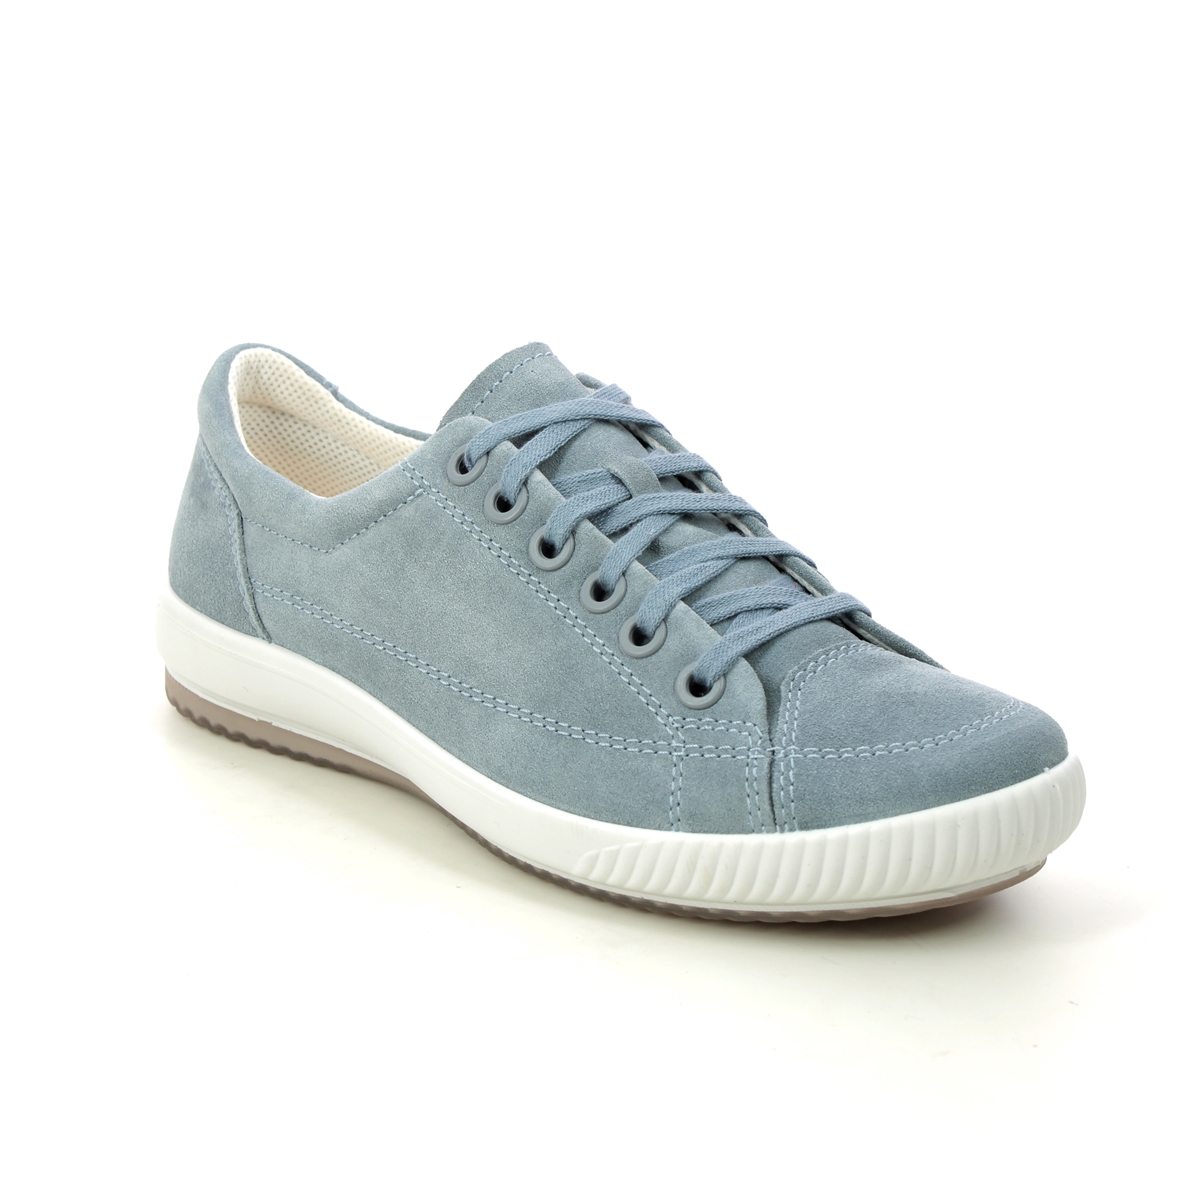 Legero Tanaro 5 Stitch Blue Grey Womens Lacing Shoes 2000161-8500 In Size 4.5 In Plain Blue Grey